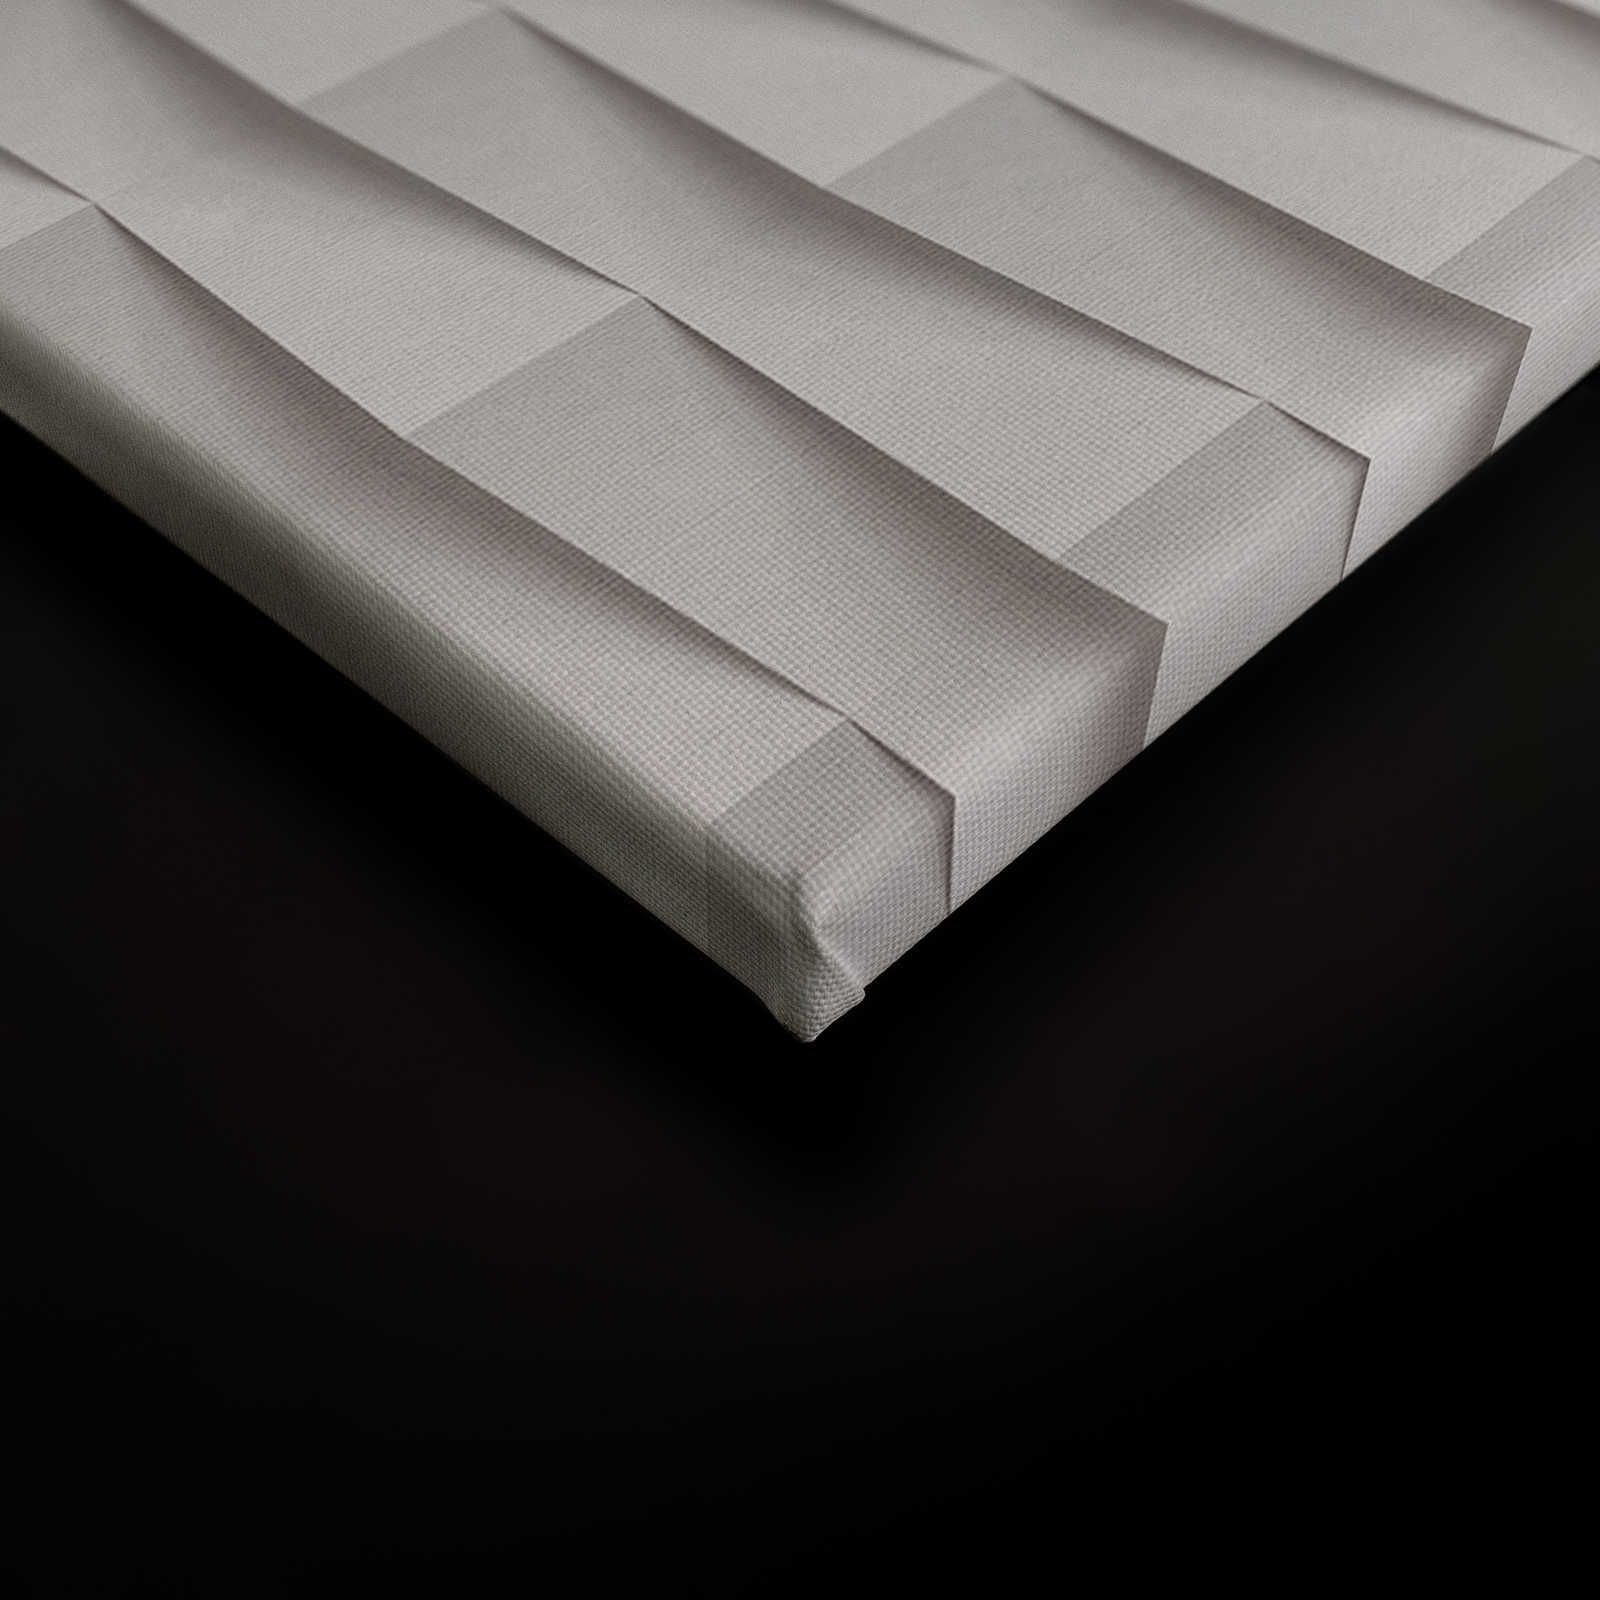             Paper House 2 - 3D Leinwandbild Papier Falten Design mit Schattenwurf – 1,20 m x 0,80 m
        